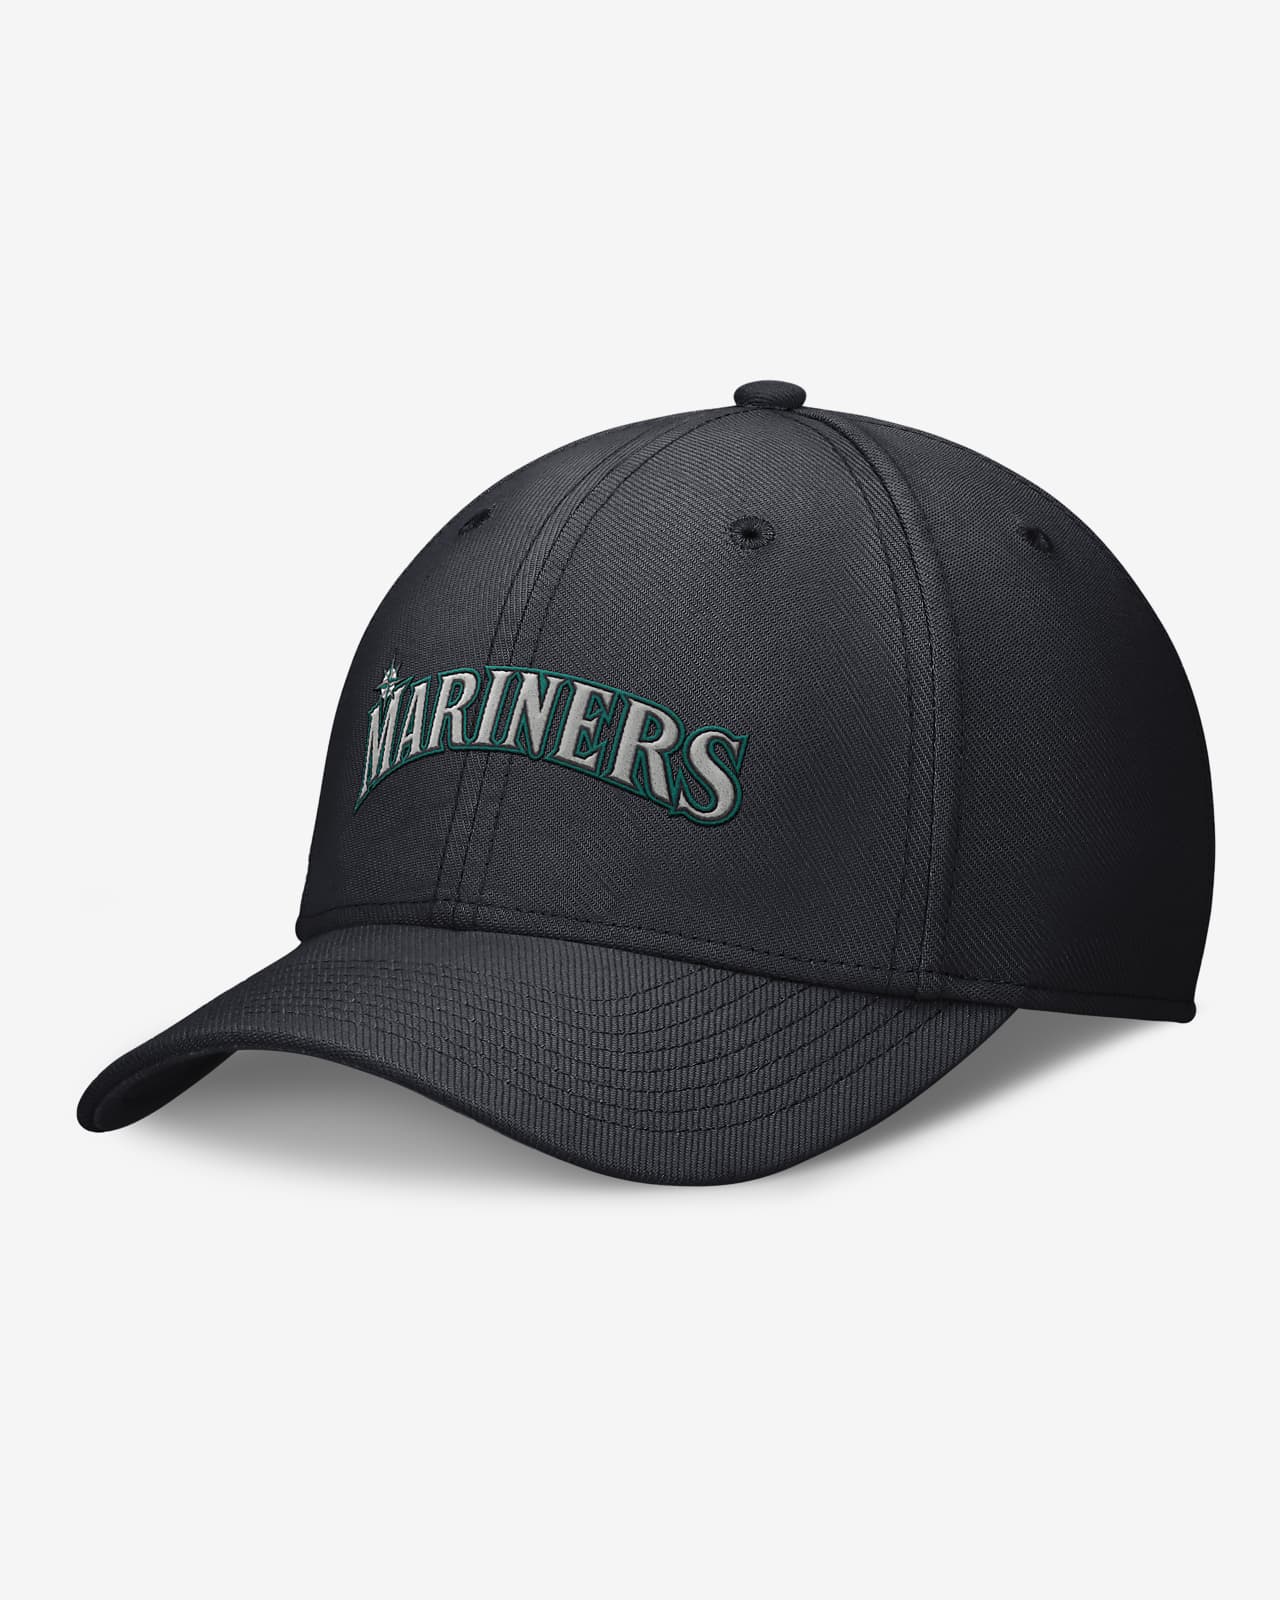 Seattle Mariners cap